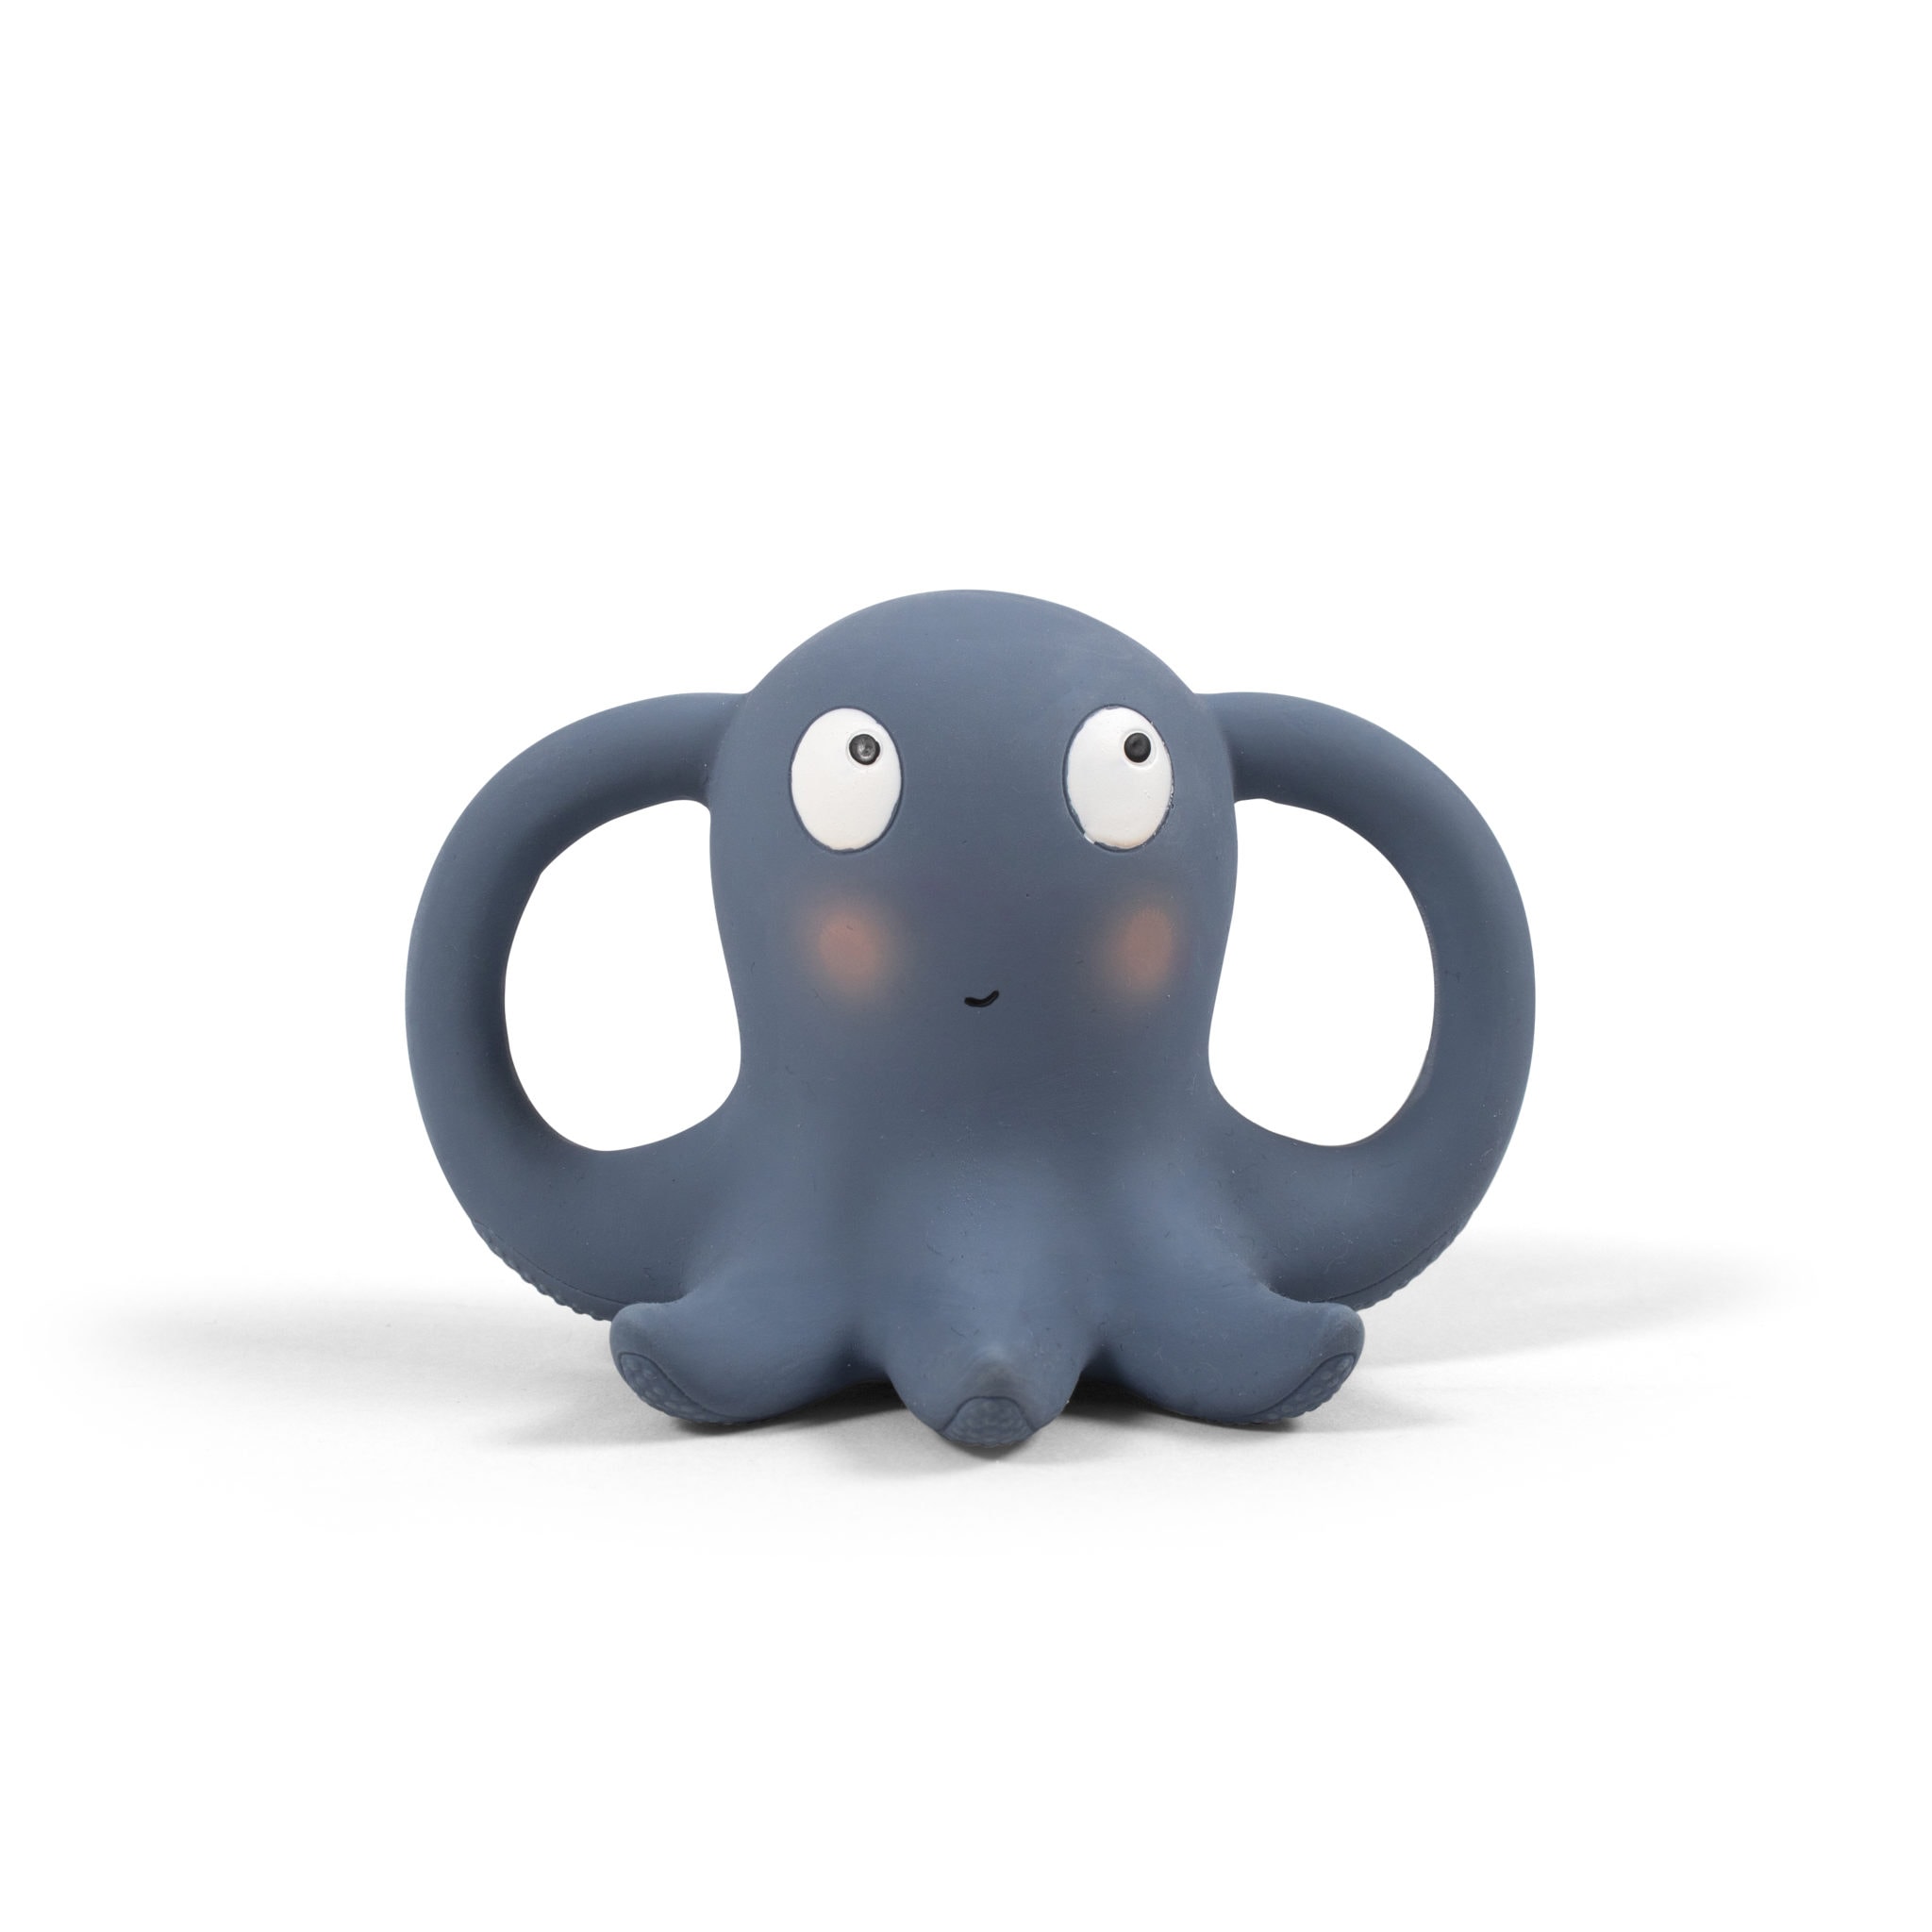 Filibabba - Bijtring -  Otto de octopus - Muddly blue